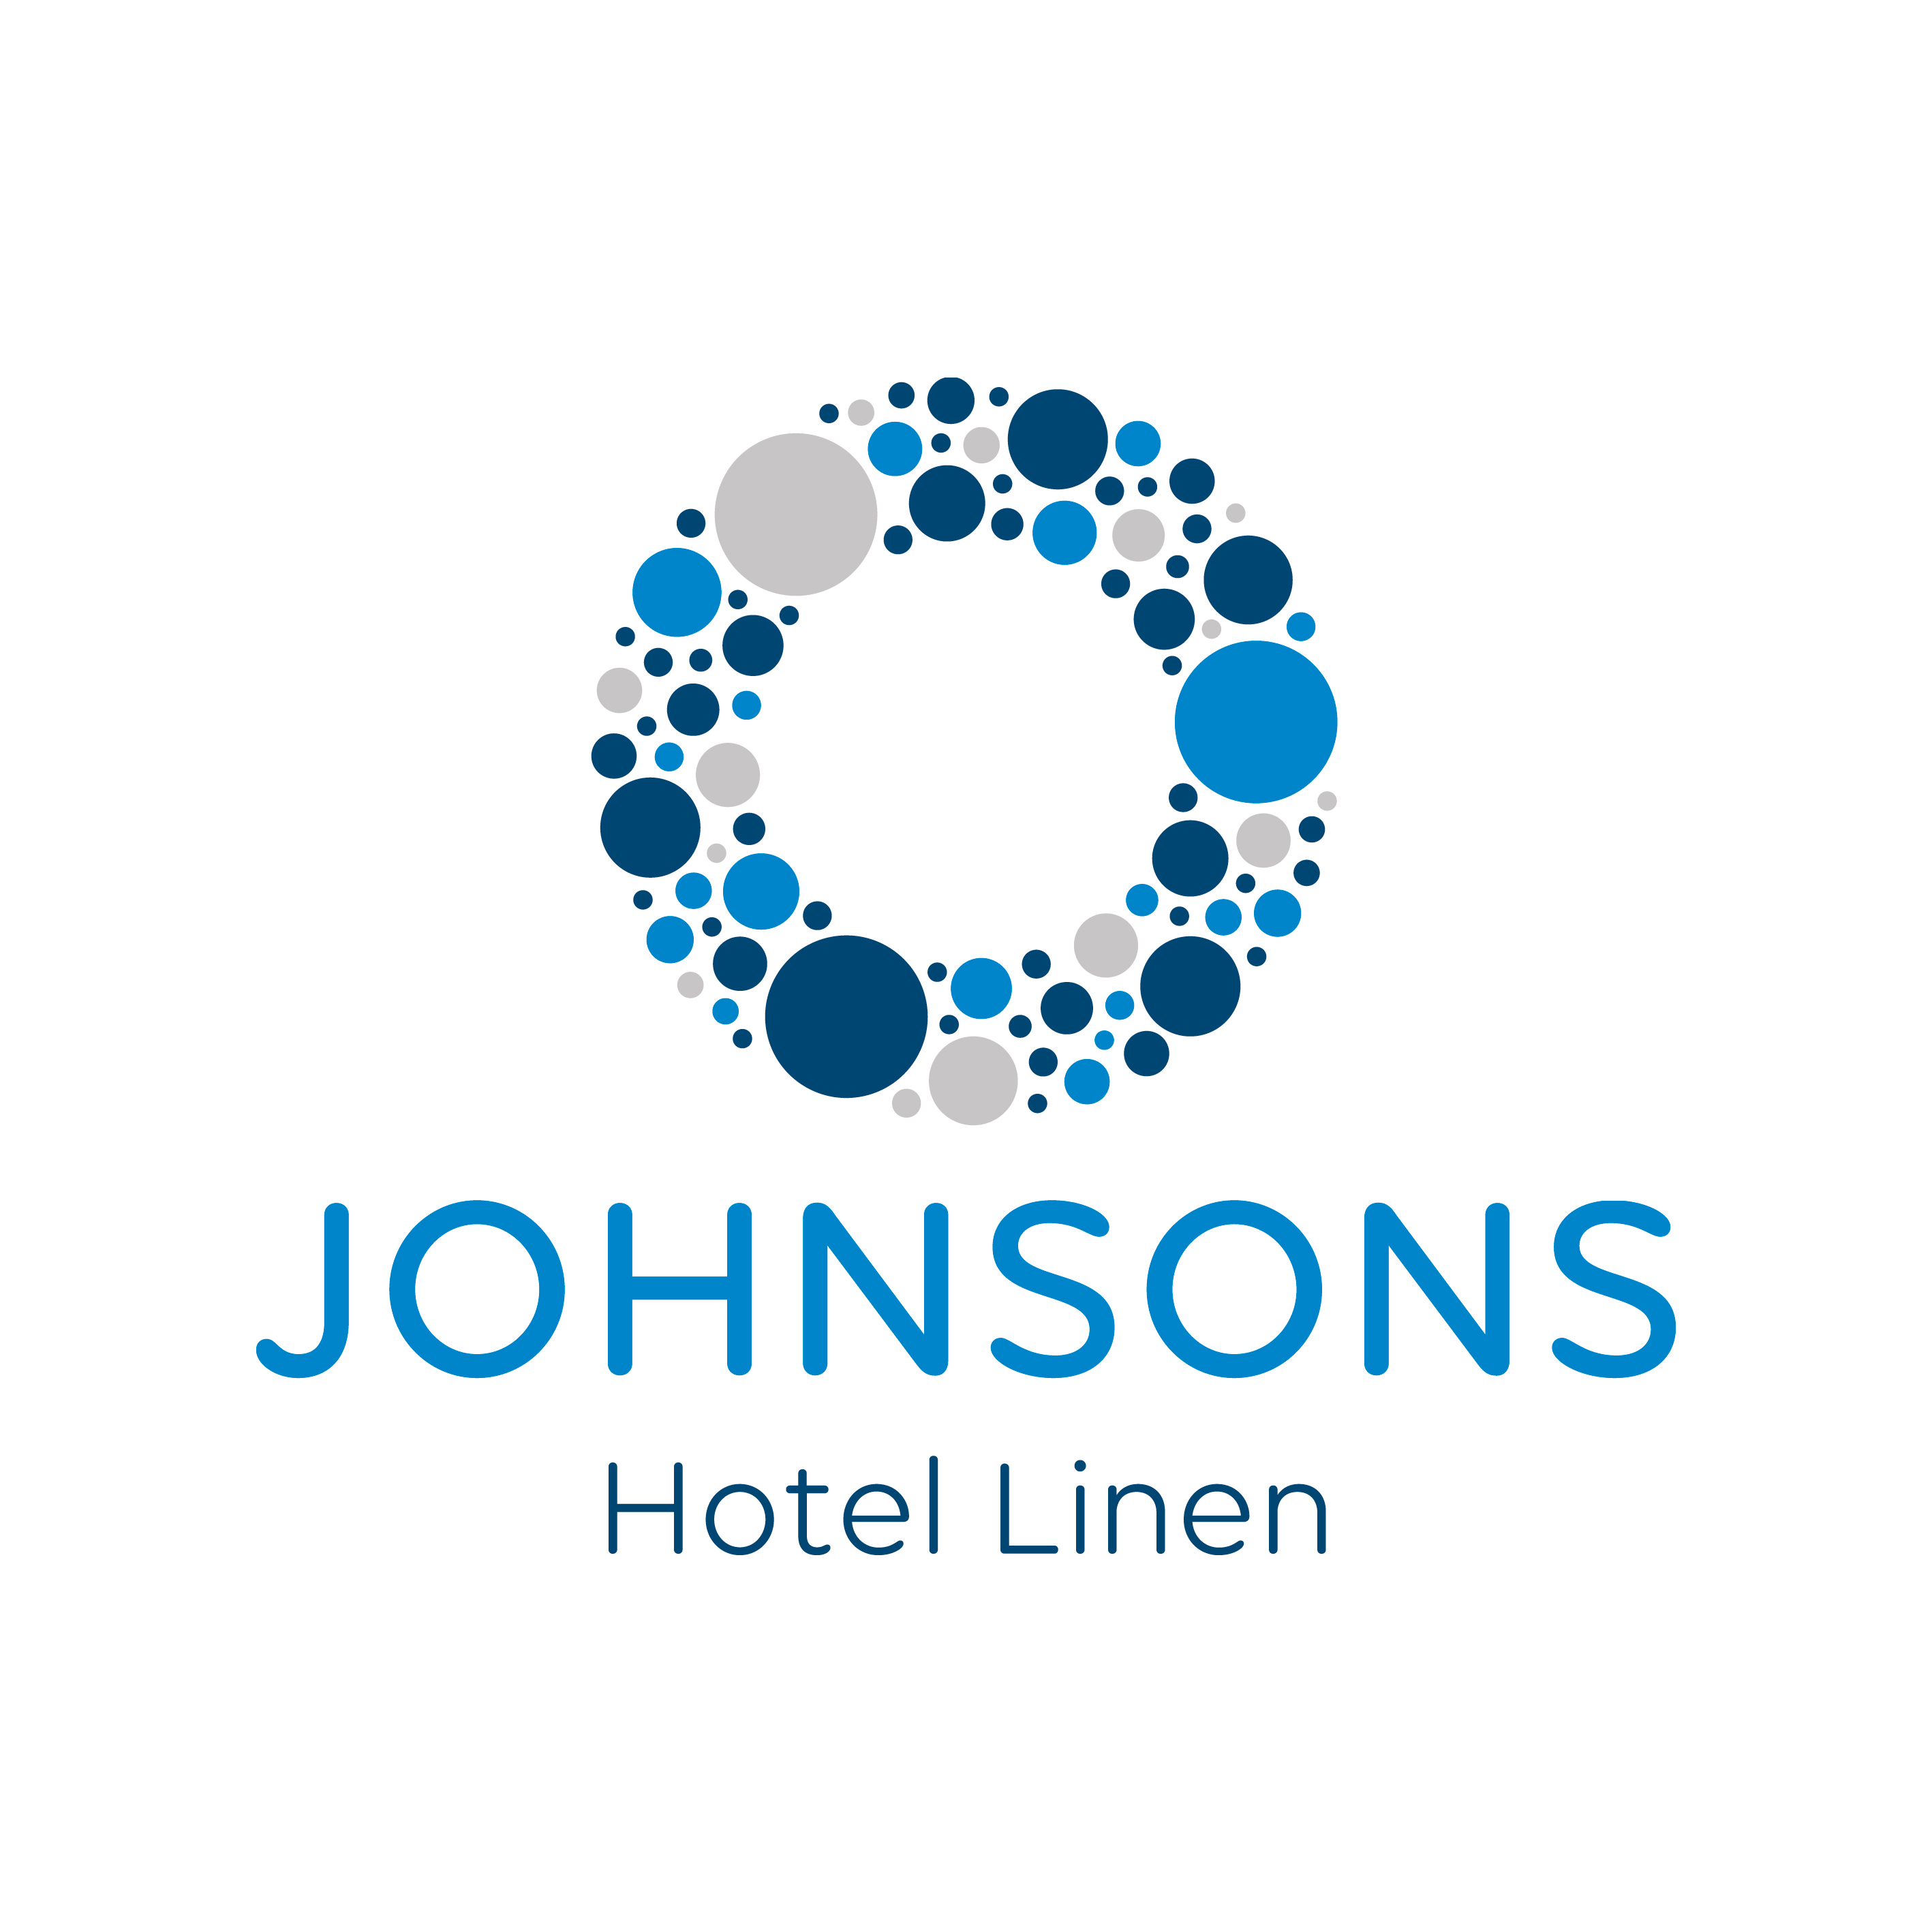 Johnsons Hotel Linen logo